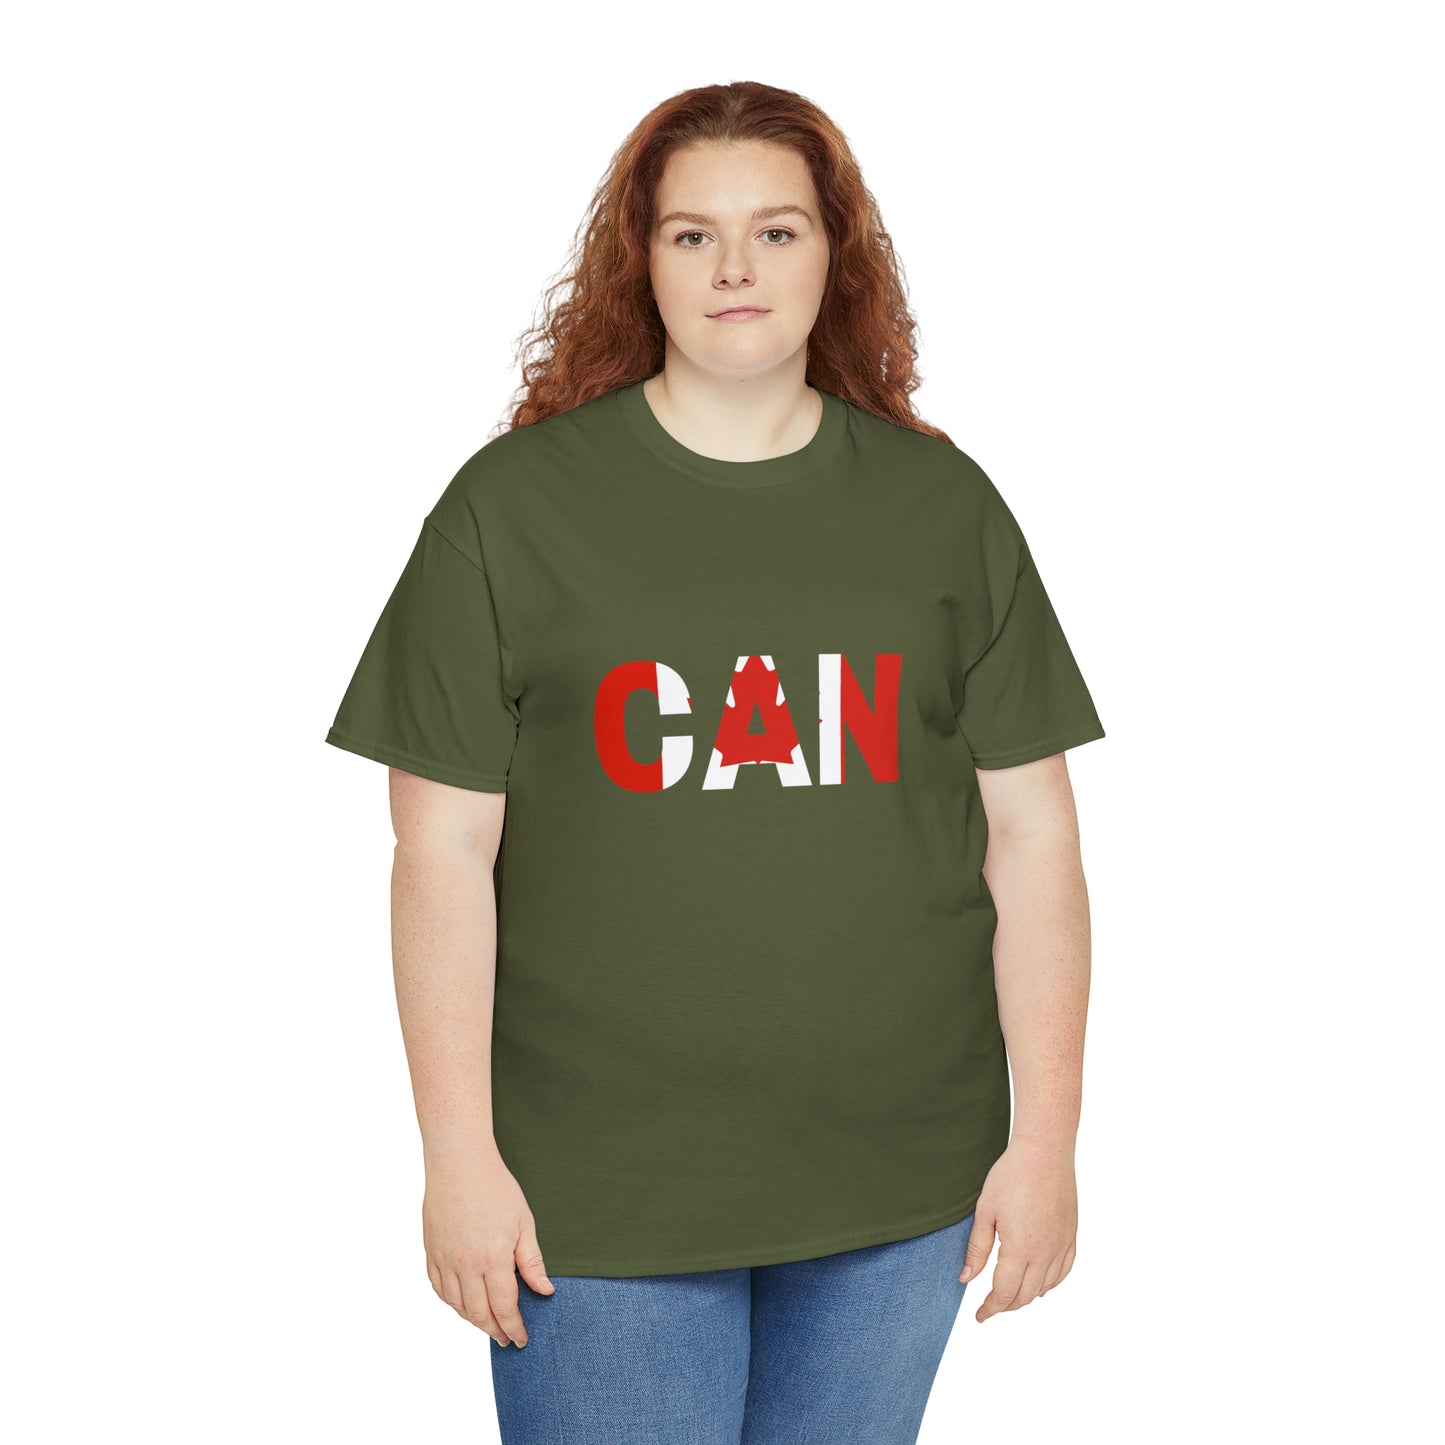 Canada By JDBexclusive..com